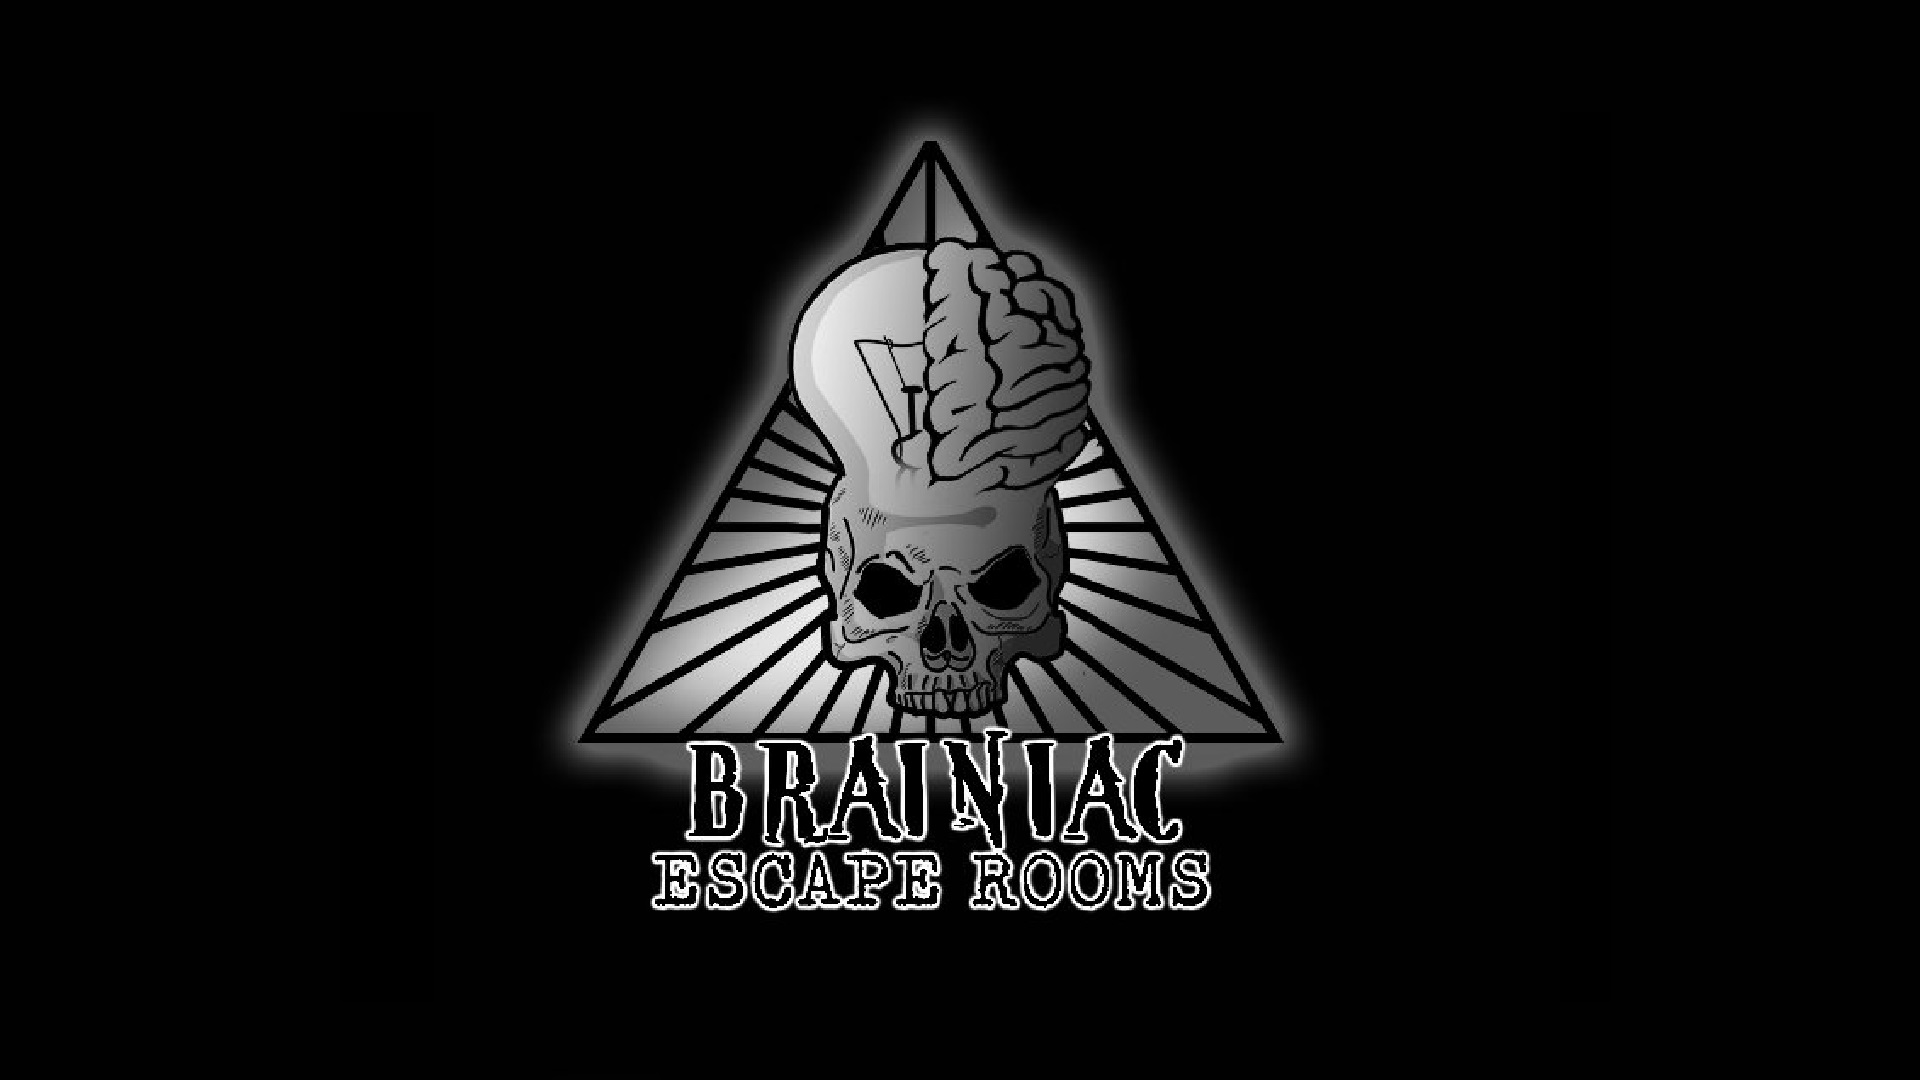 Live συνέντευξη με την εταιρία Brainiac Escape Rooms